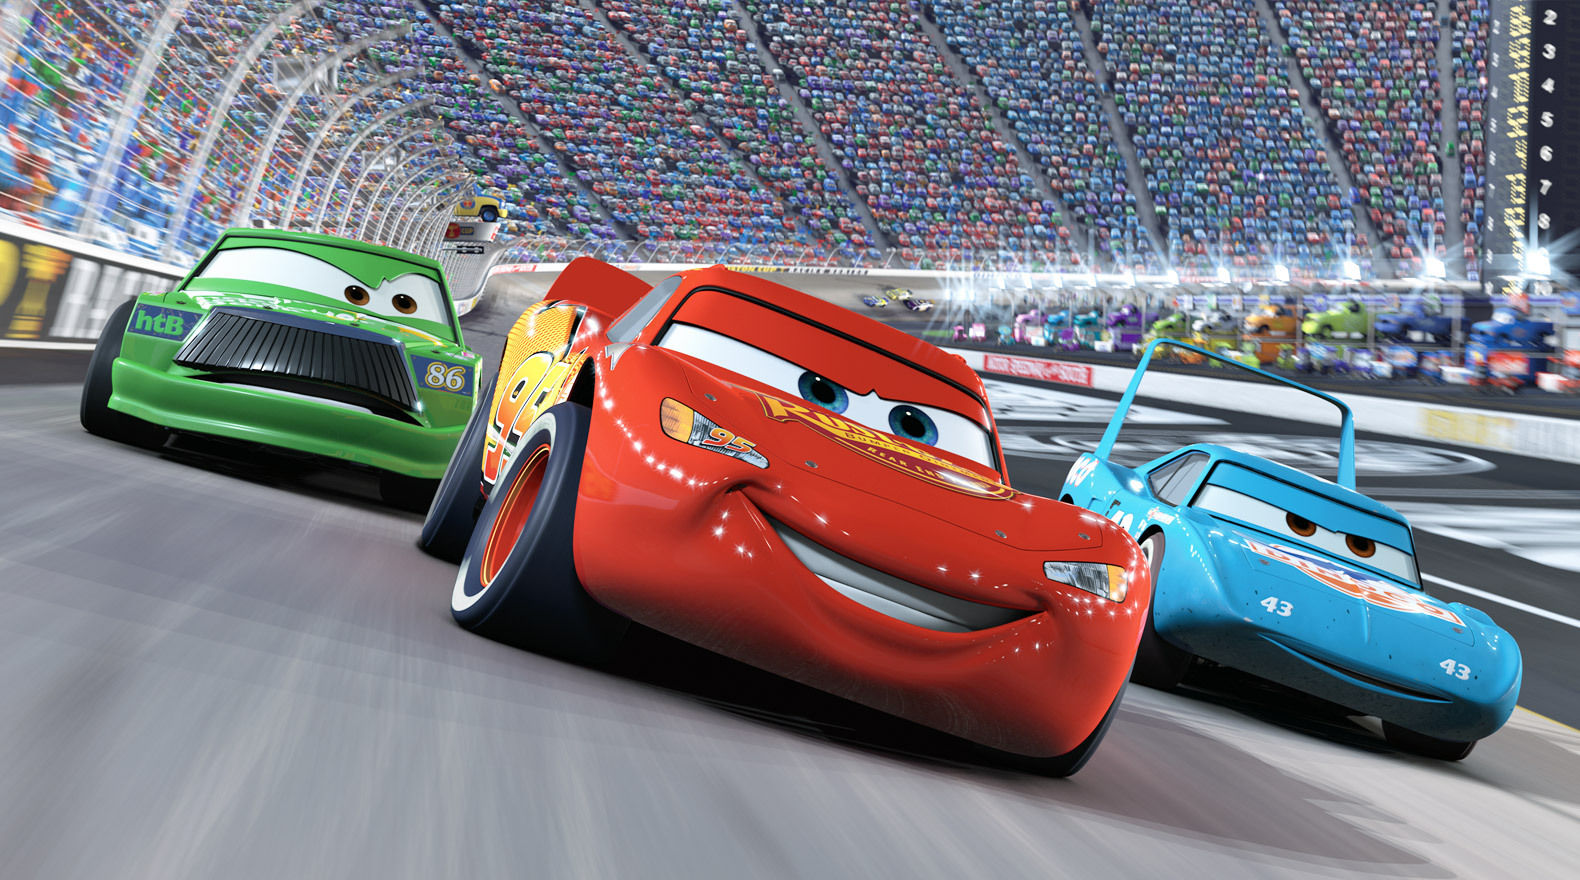 Disney-Pixar Teases High-Paced 'Cars 3